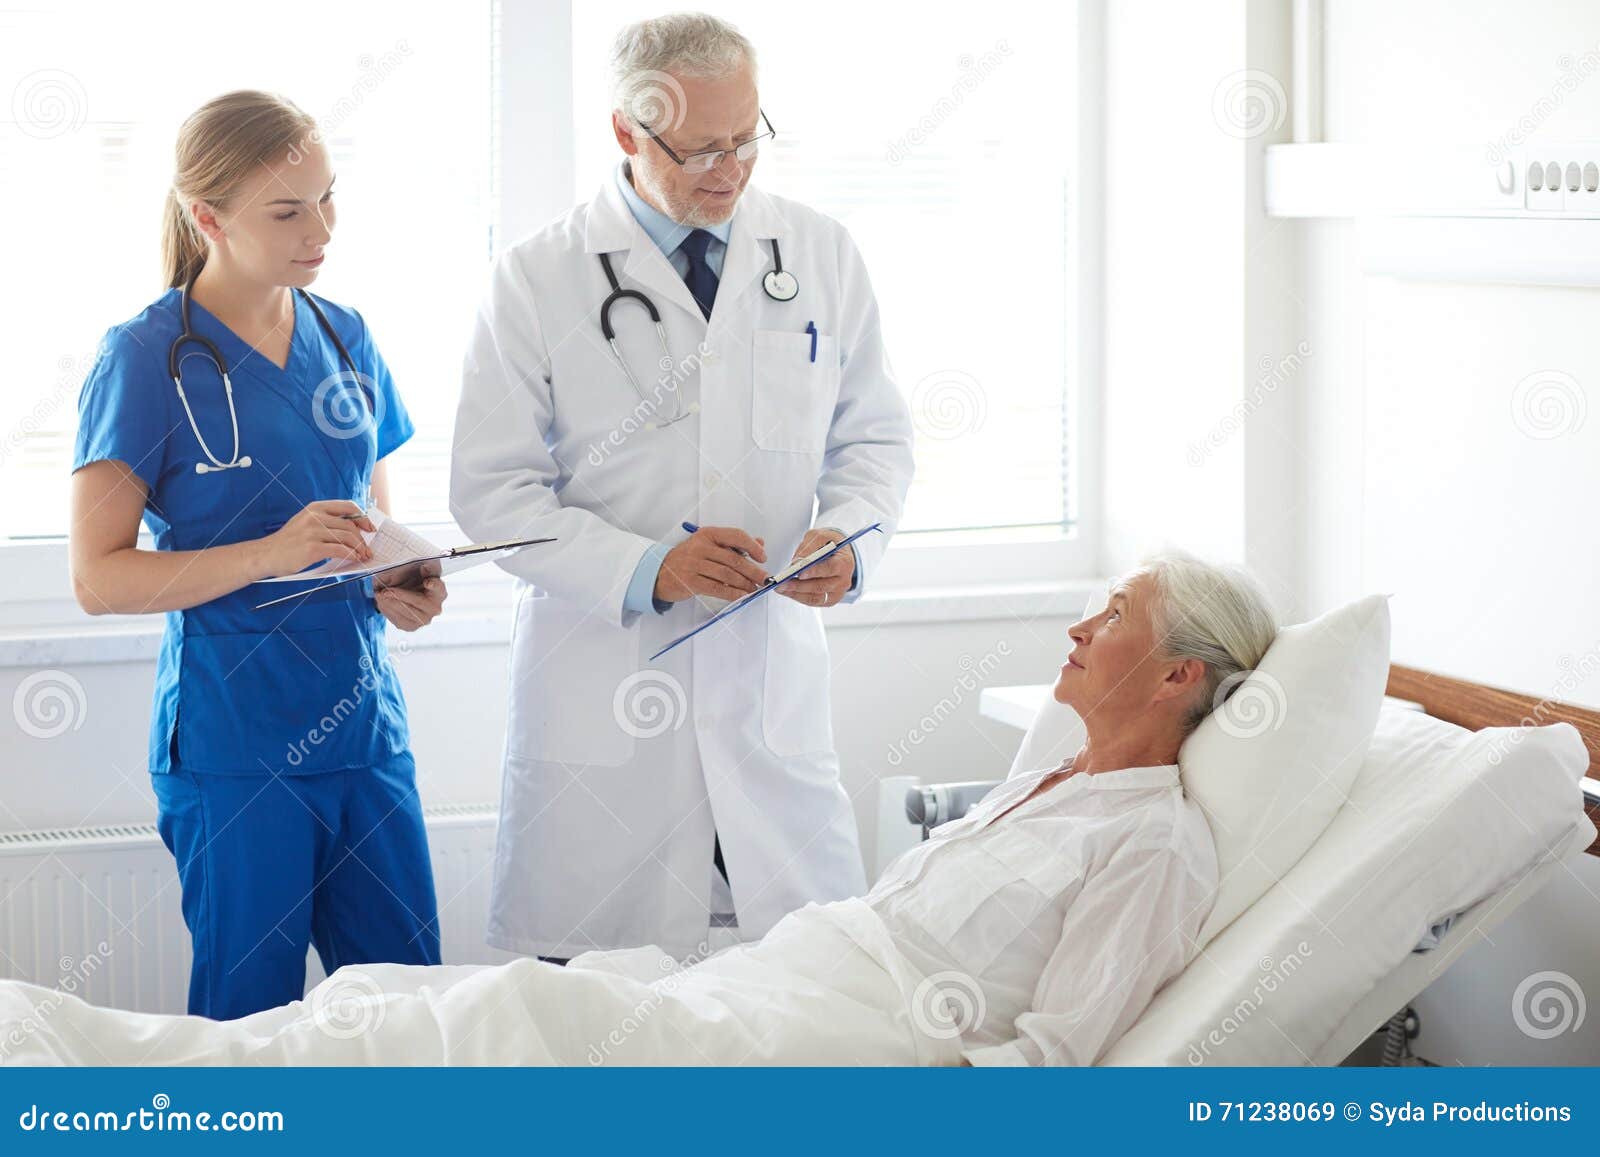 doctor visit nurse